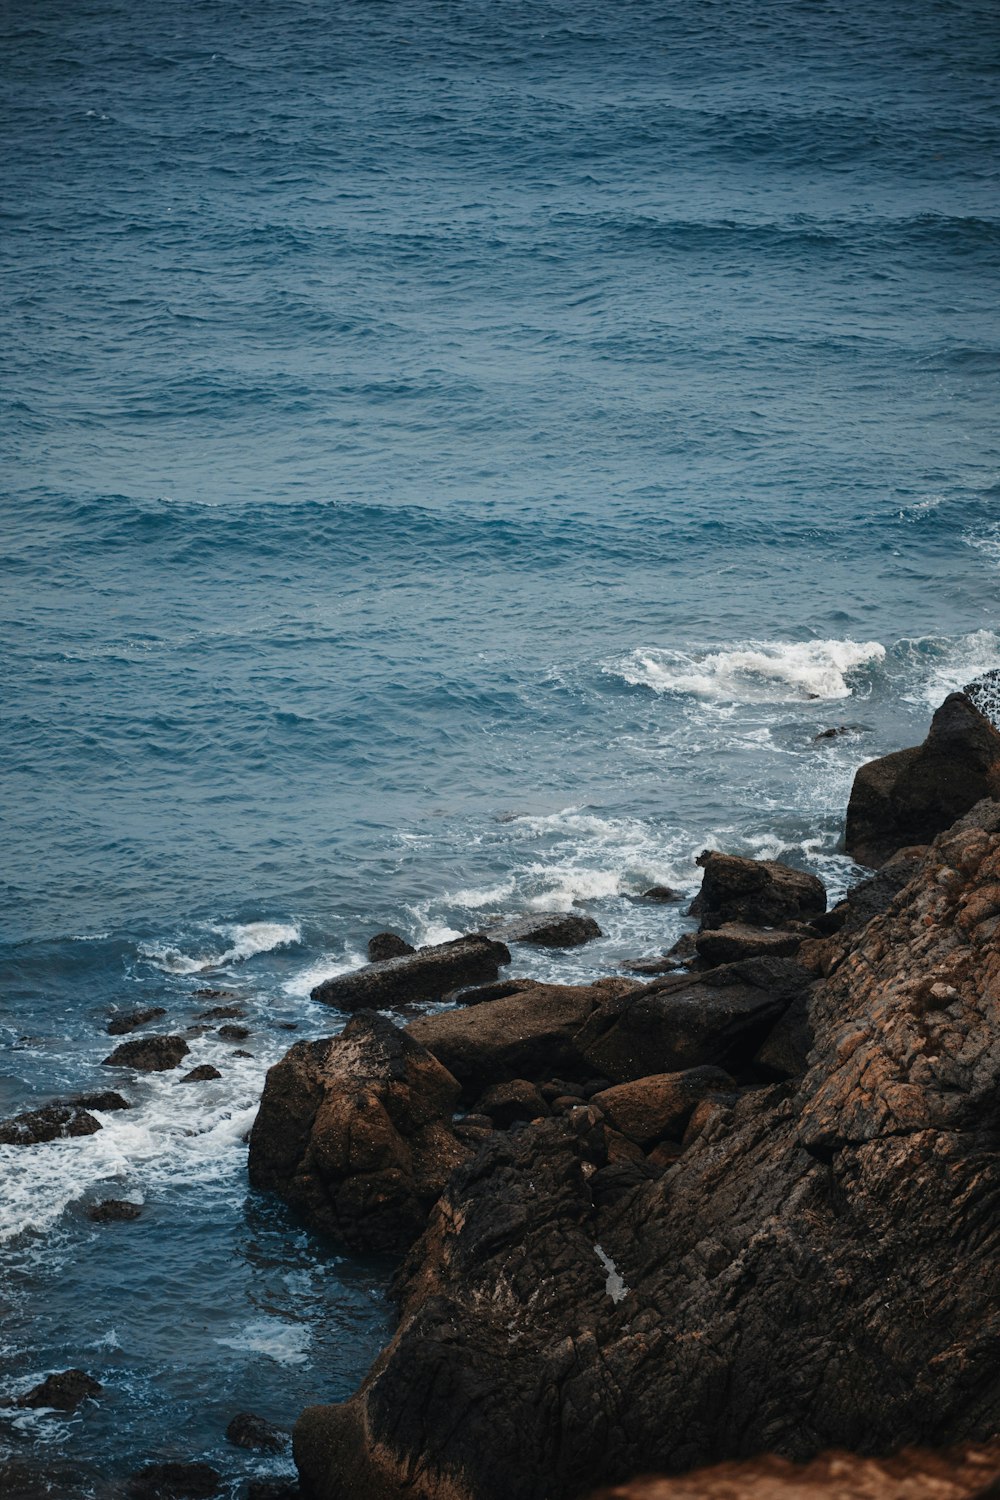 a lone bird sitting on a rock near the ocean